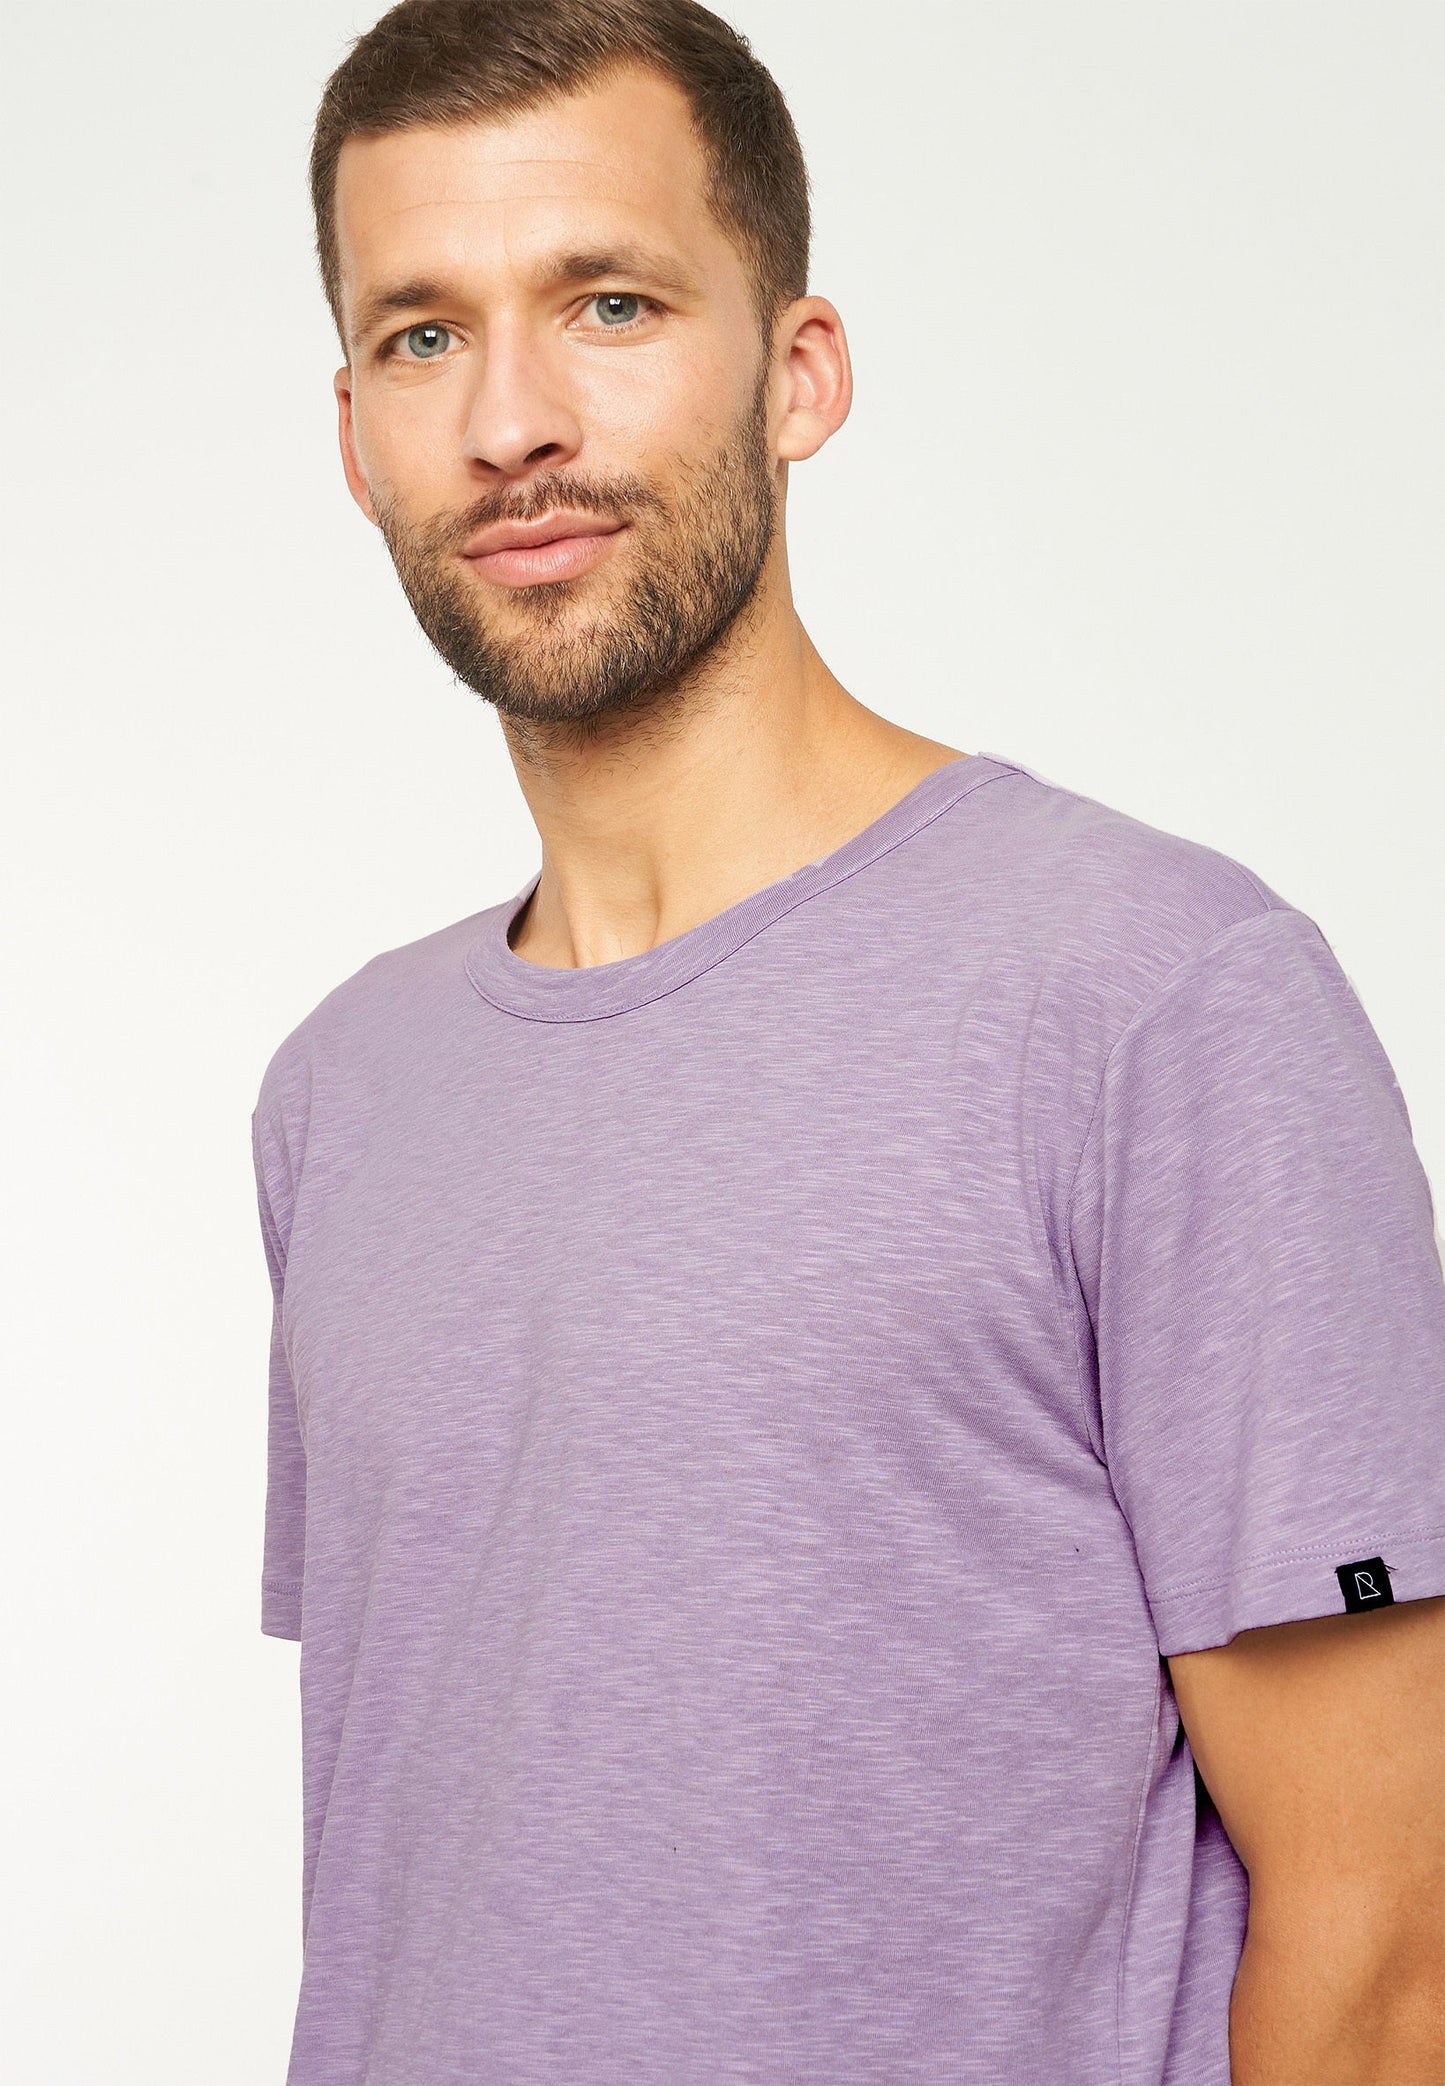 
                  
                    BAY Gray Lilac T-Shirt
                  
                